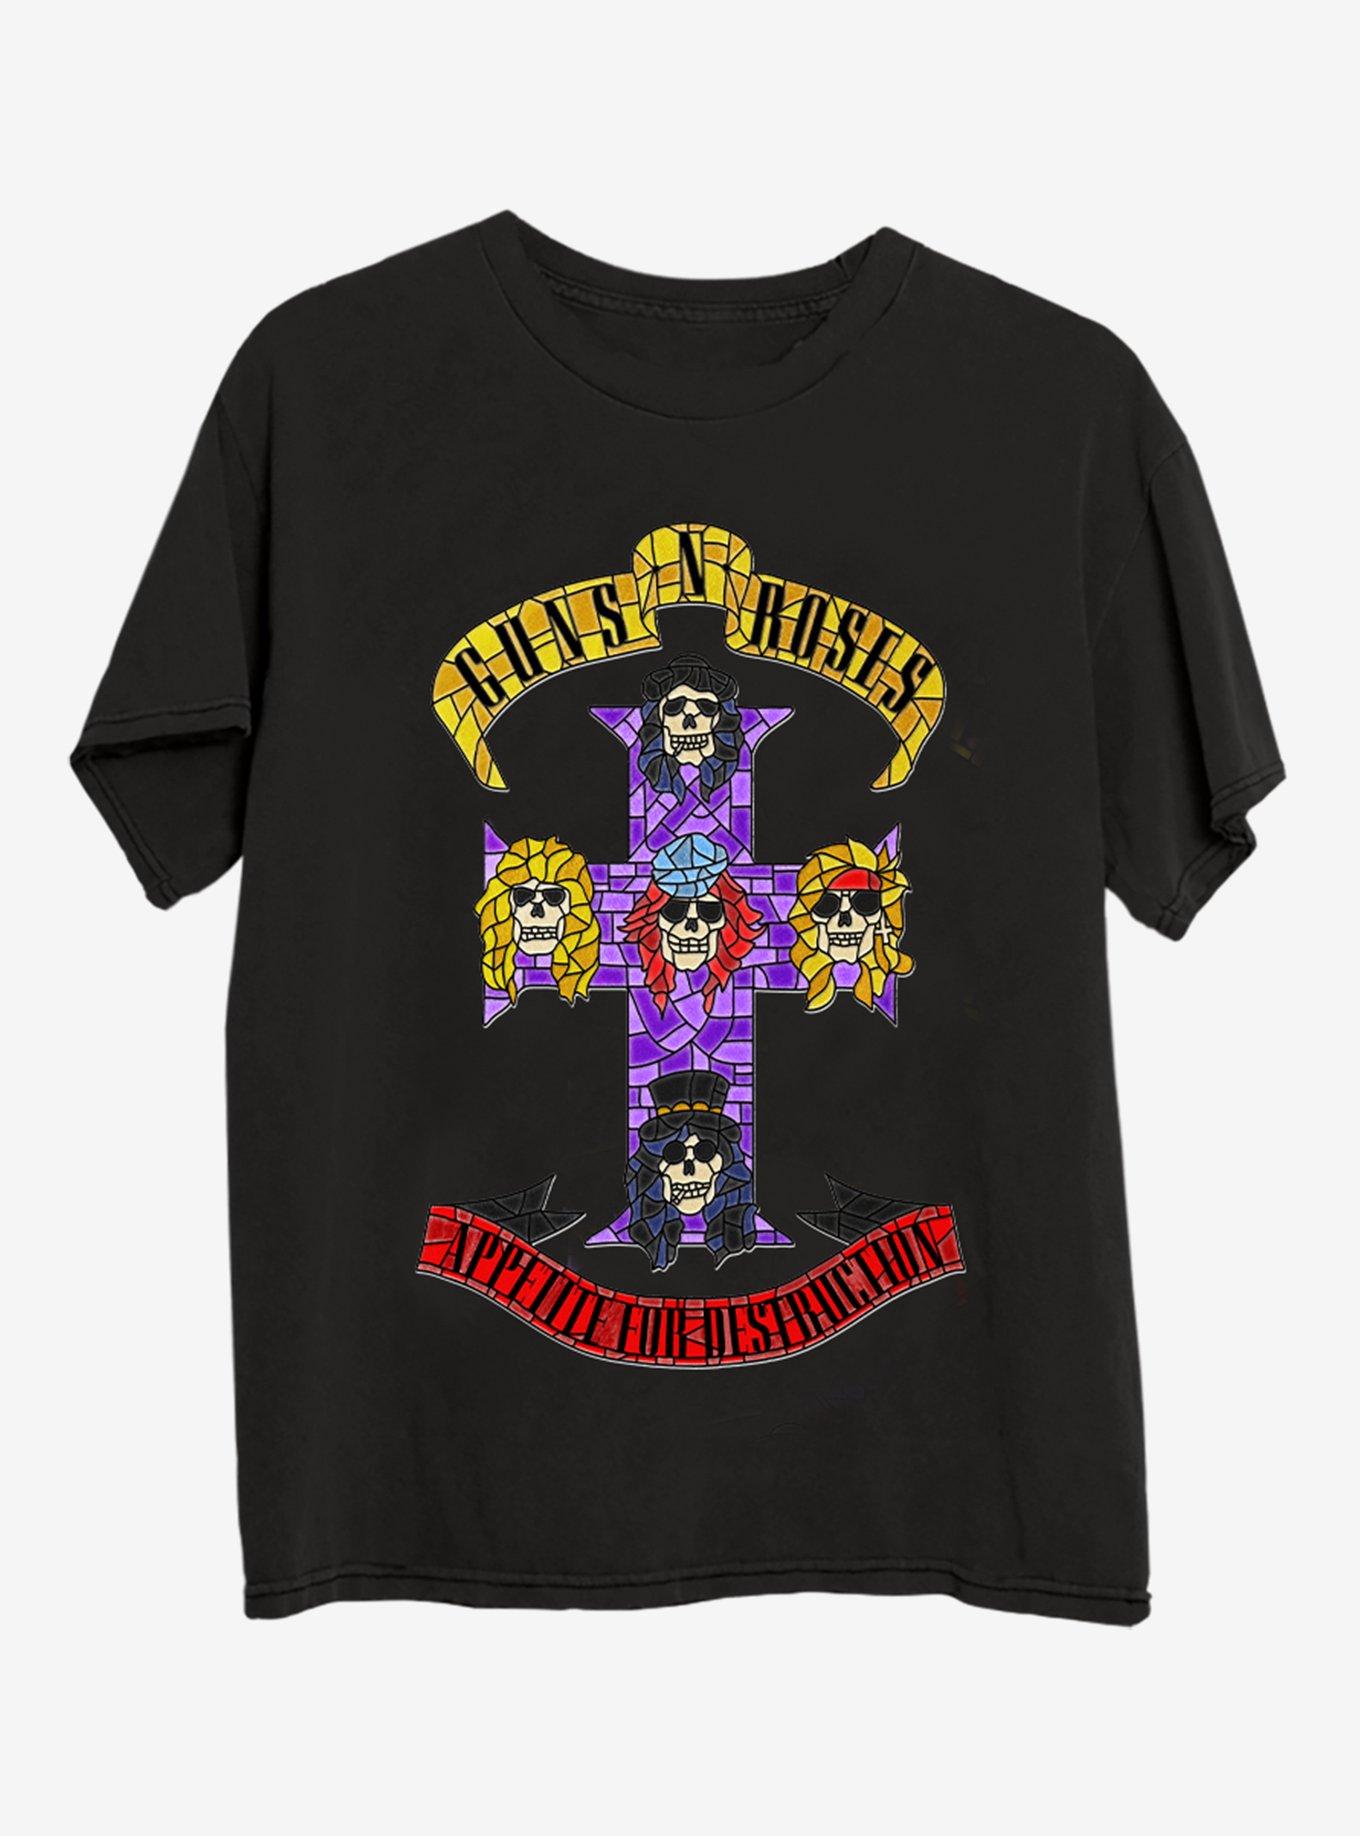 Guns N' Roses Appetite Boyfriend Fit Girls T-Shirt, BLACK, hi-res